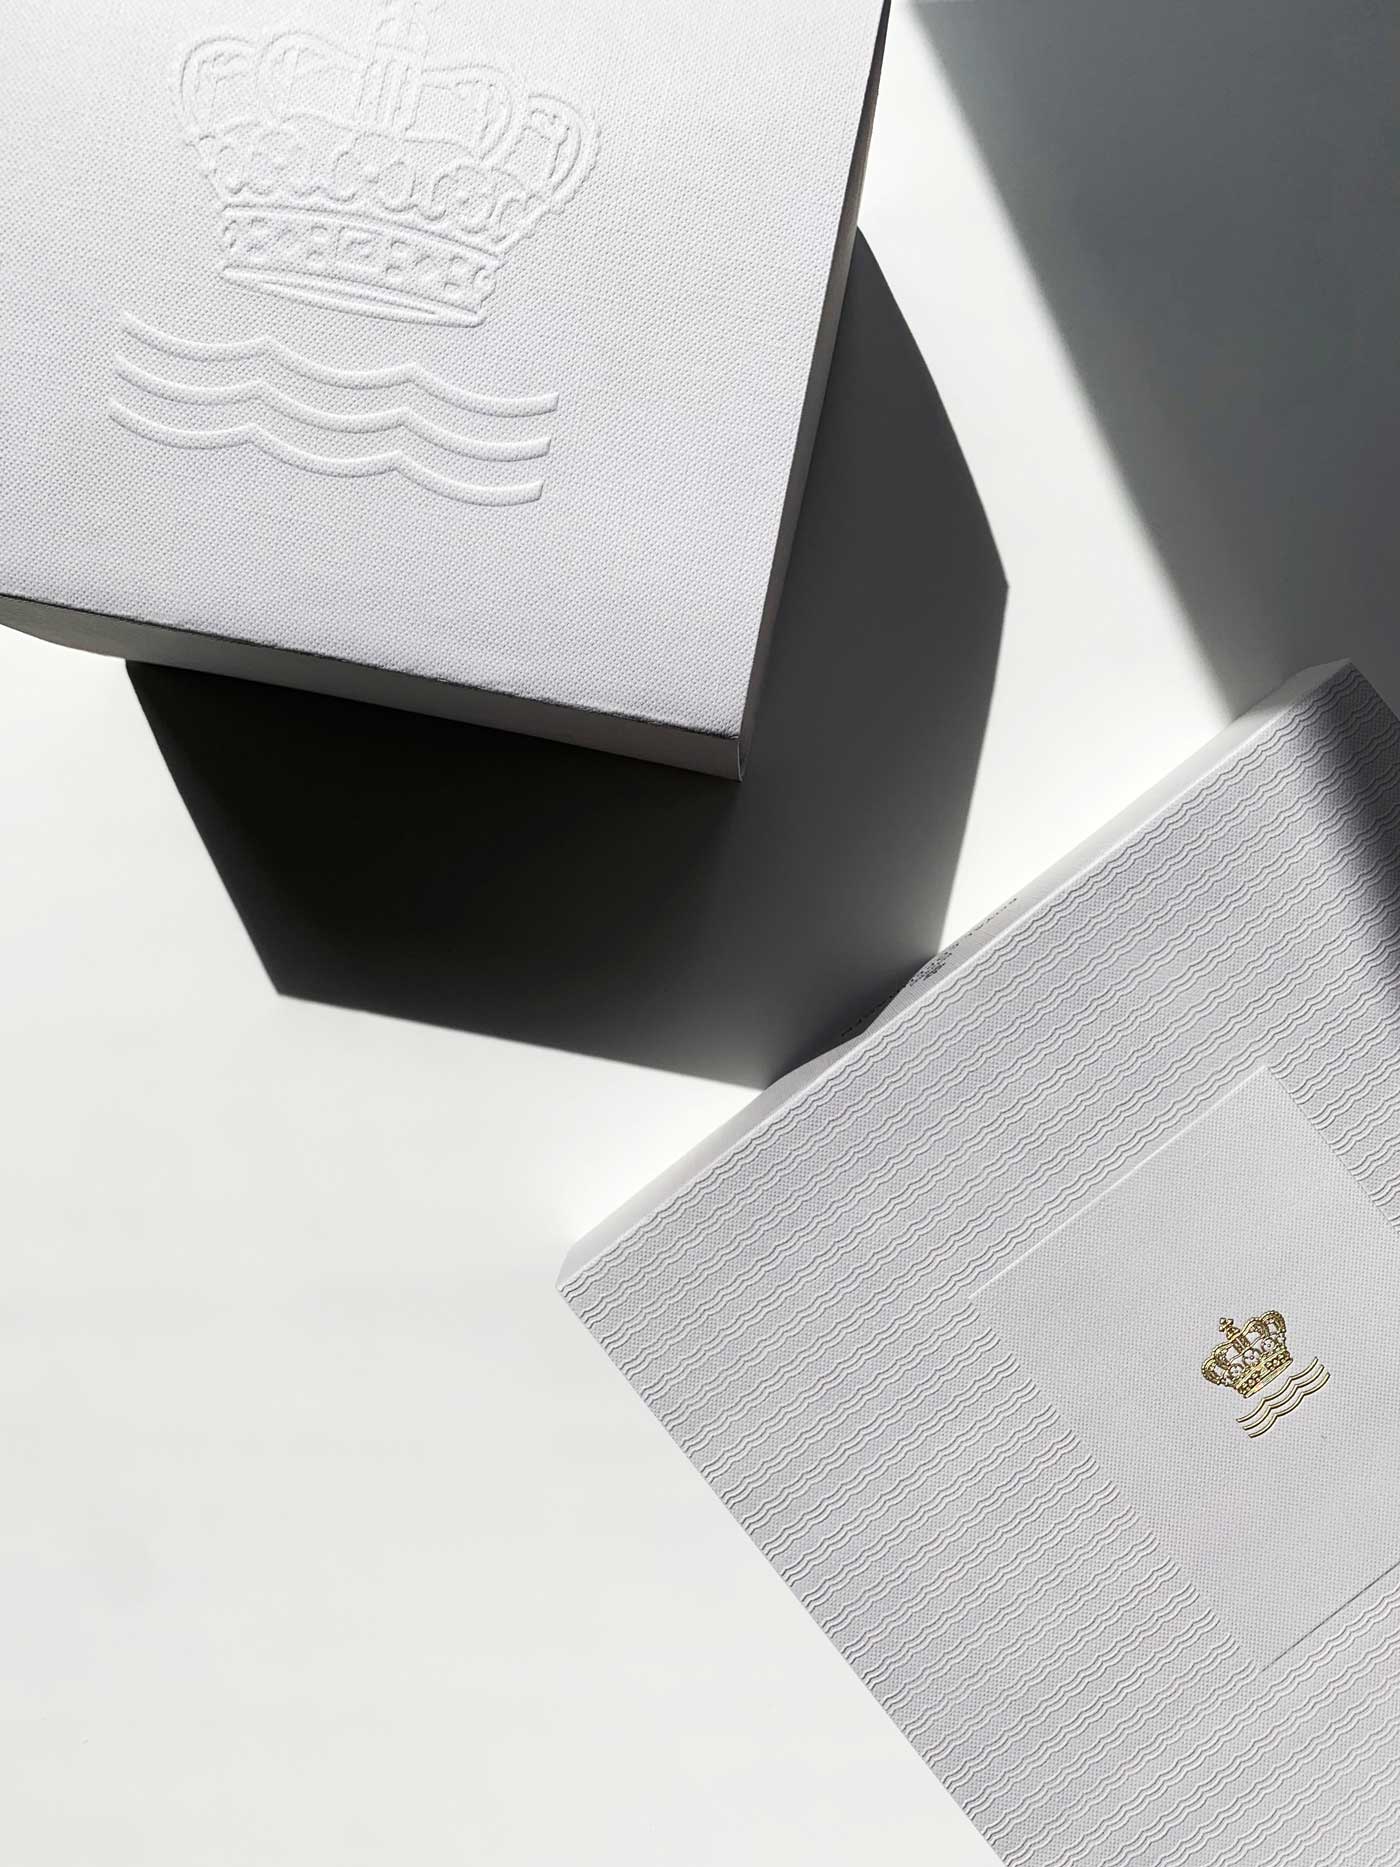 Royal Copenhagen – Packaging 2020